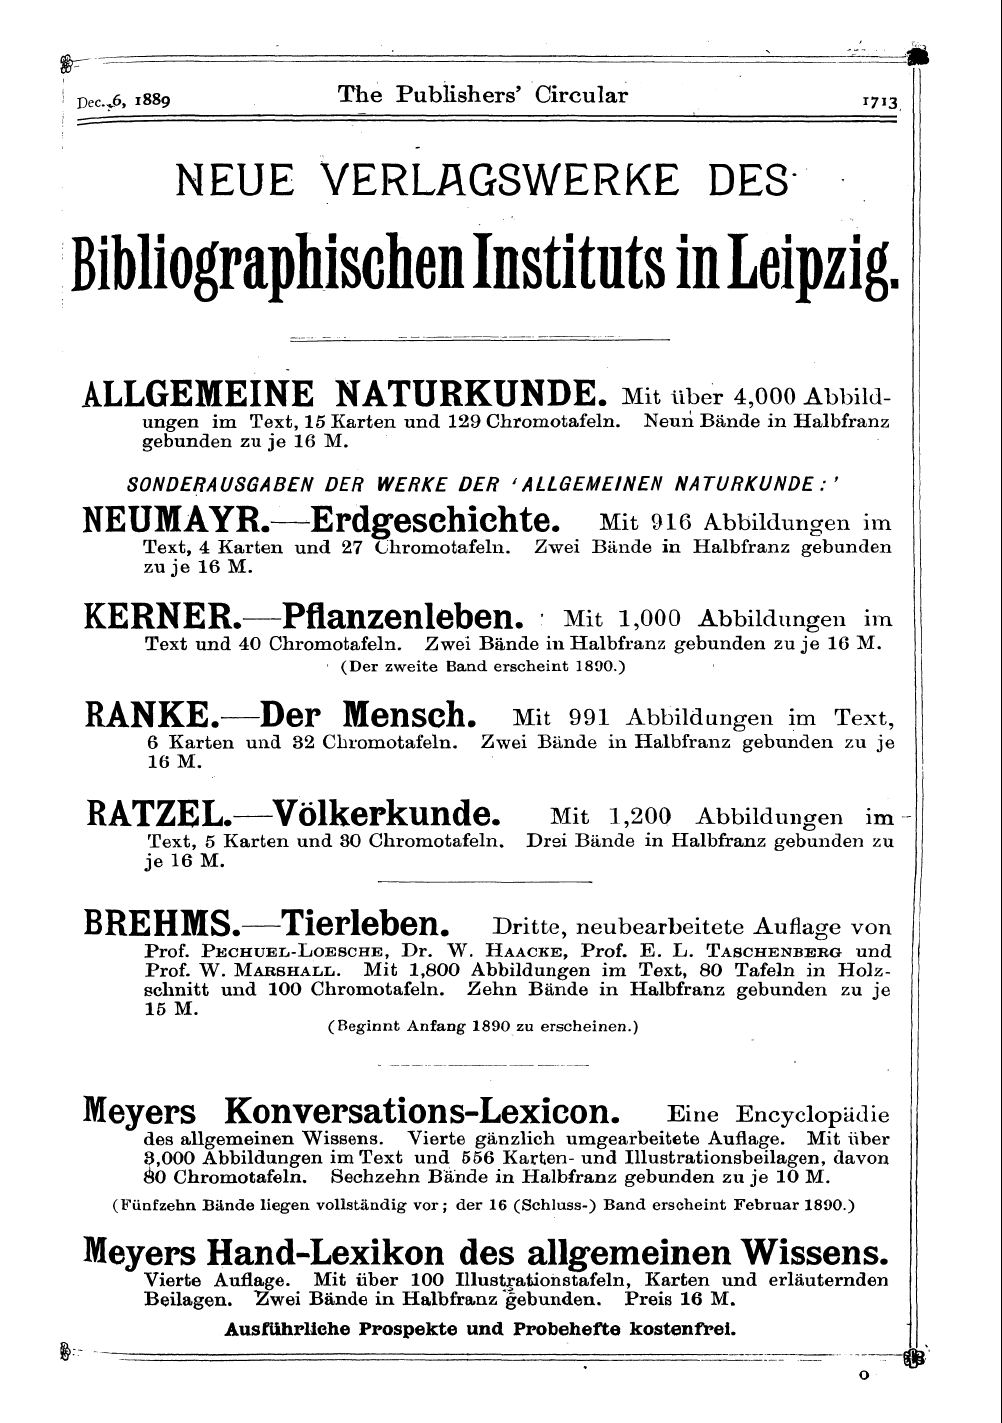 Publishers’ Circular (1880-1890): jS F Y, 1st edition: 243